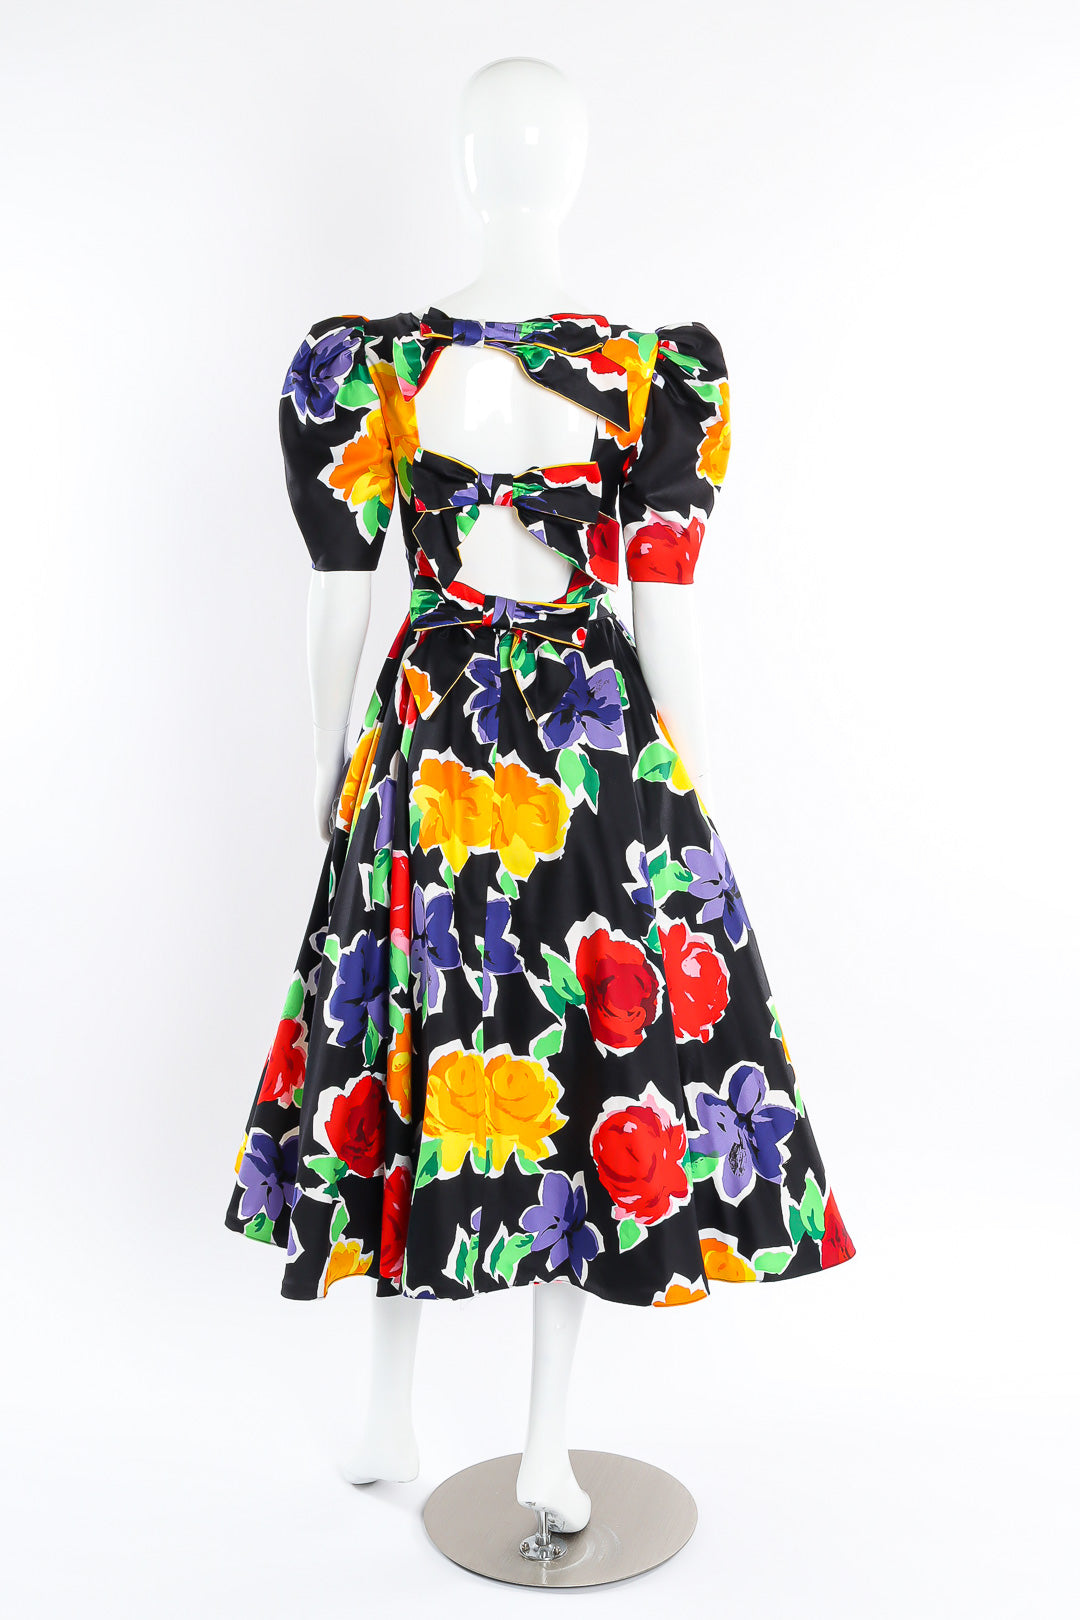 Petticoat dress by Victor Costa mannequin back @recessla